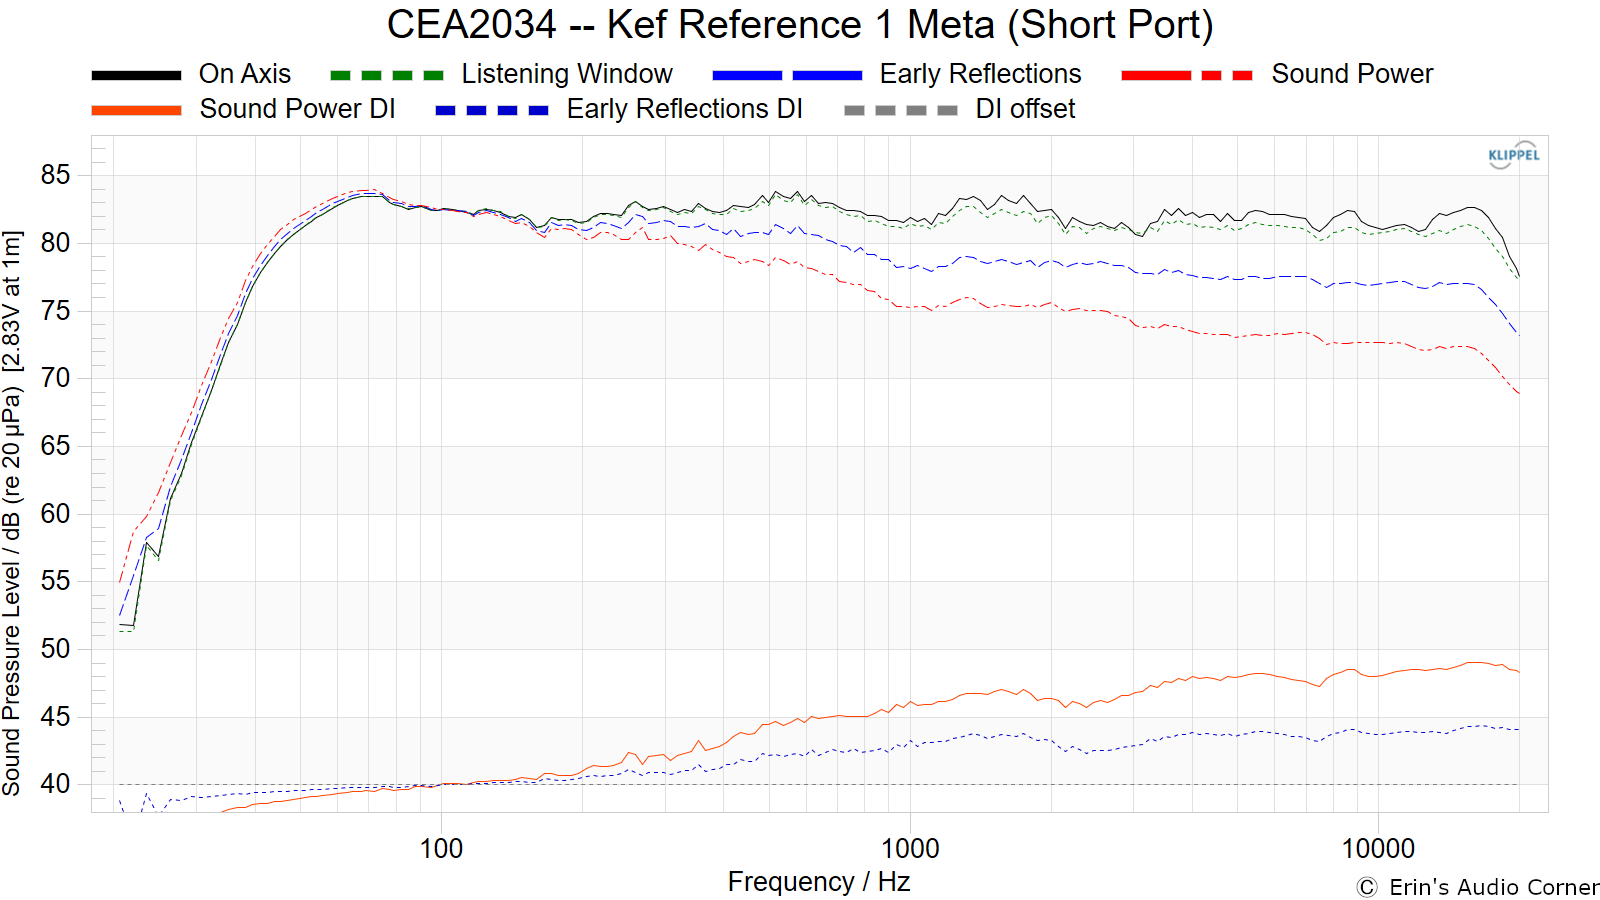 CEA2034 -- Kef Reference 1 Meta (Short Port).png